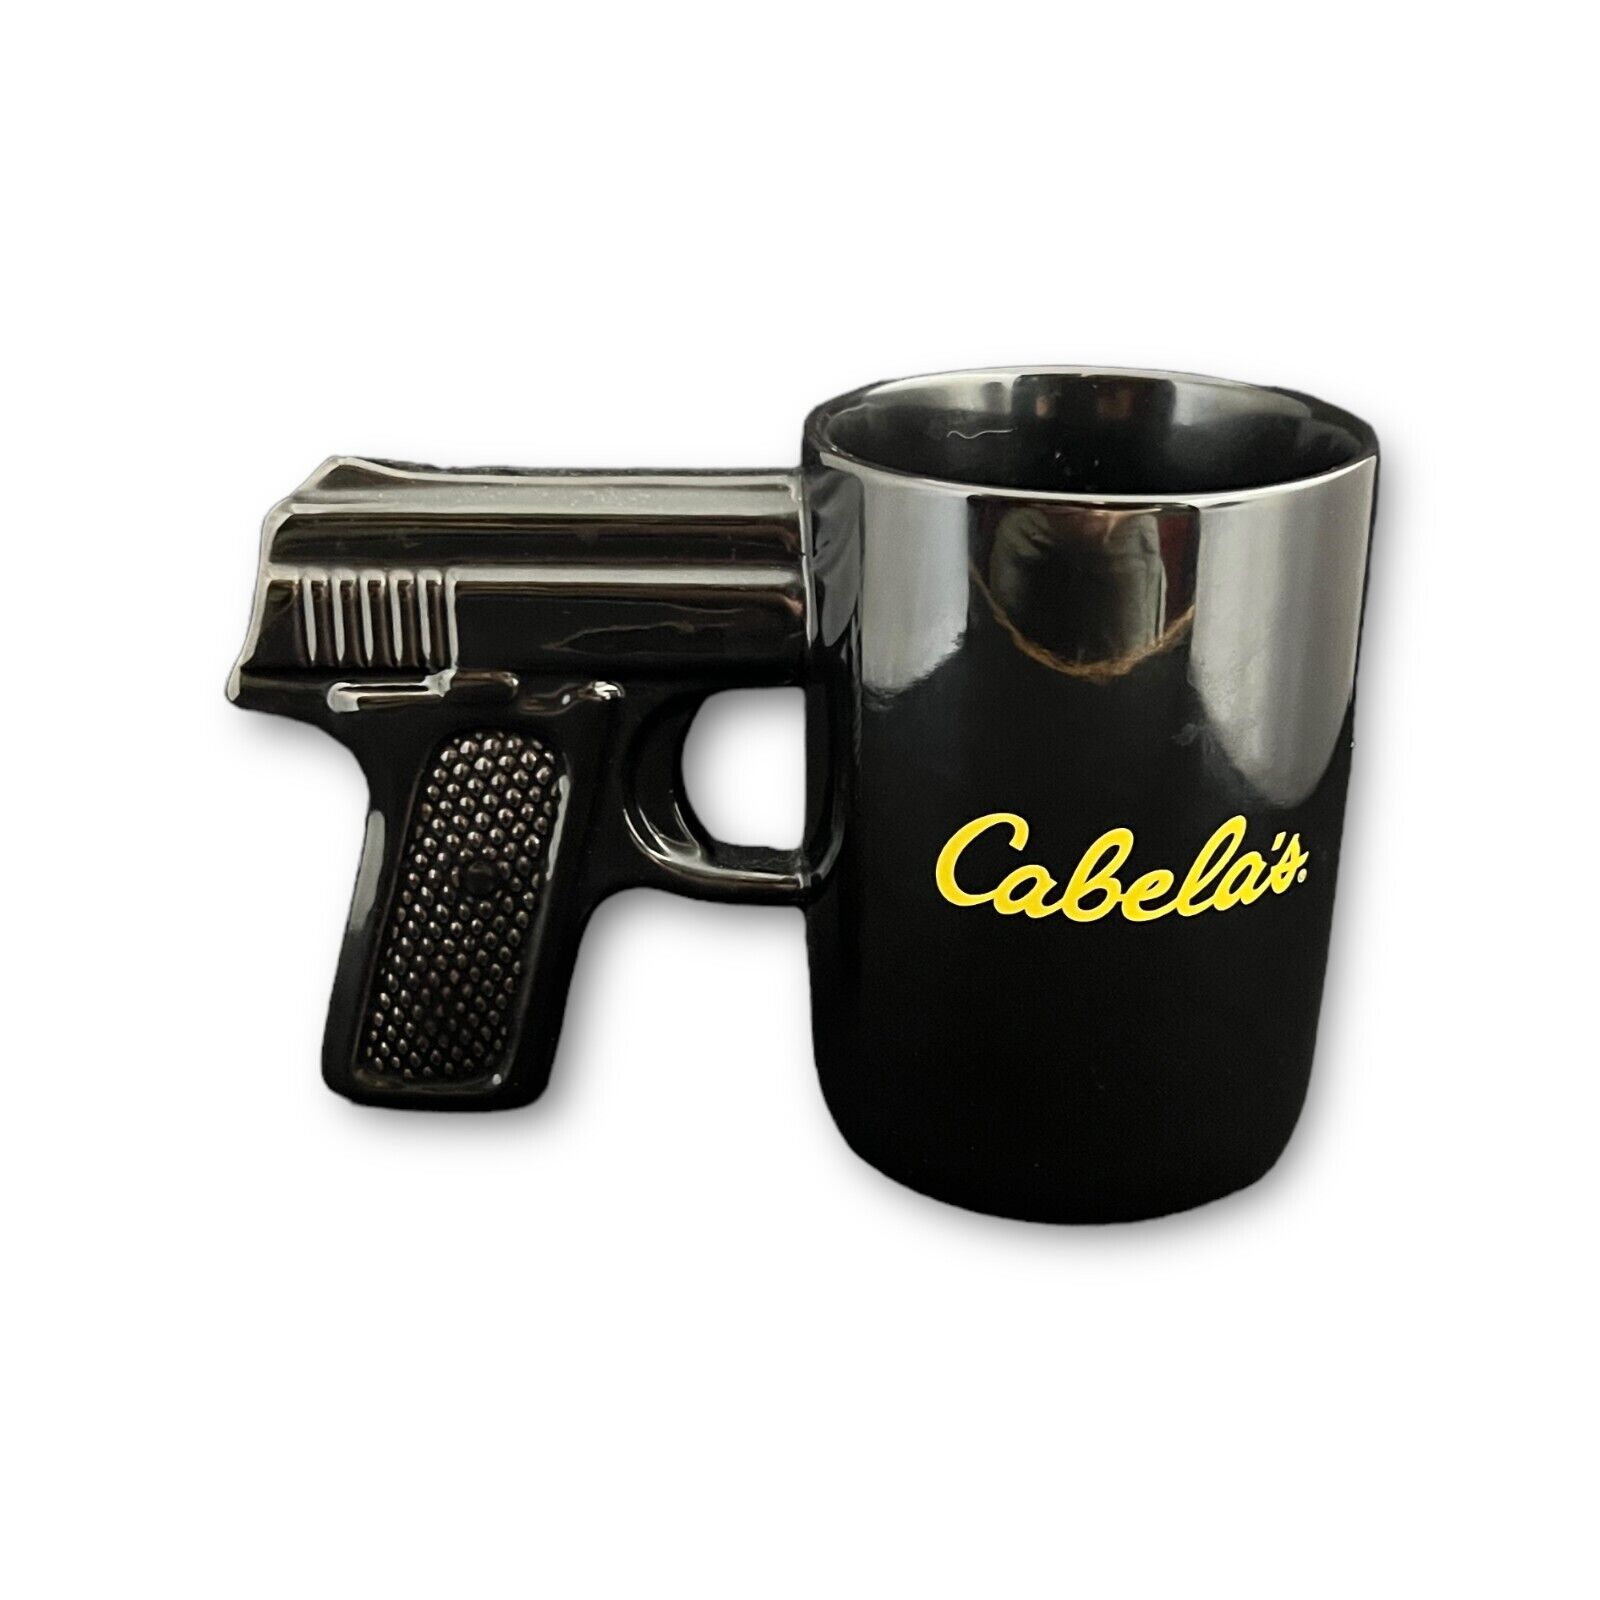 Cabela's Pistol Grip Coffee Mug Ceramic Hand Gun Handle Novelty Cup Black Yellow